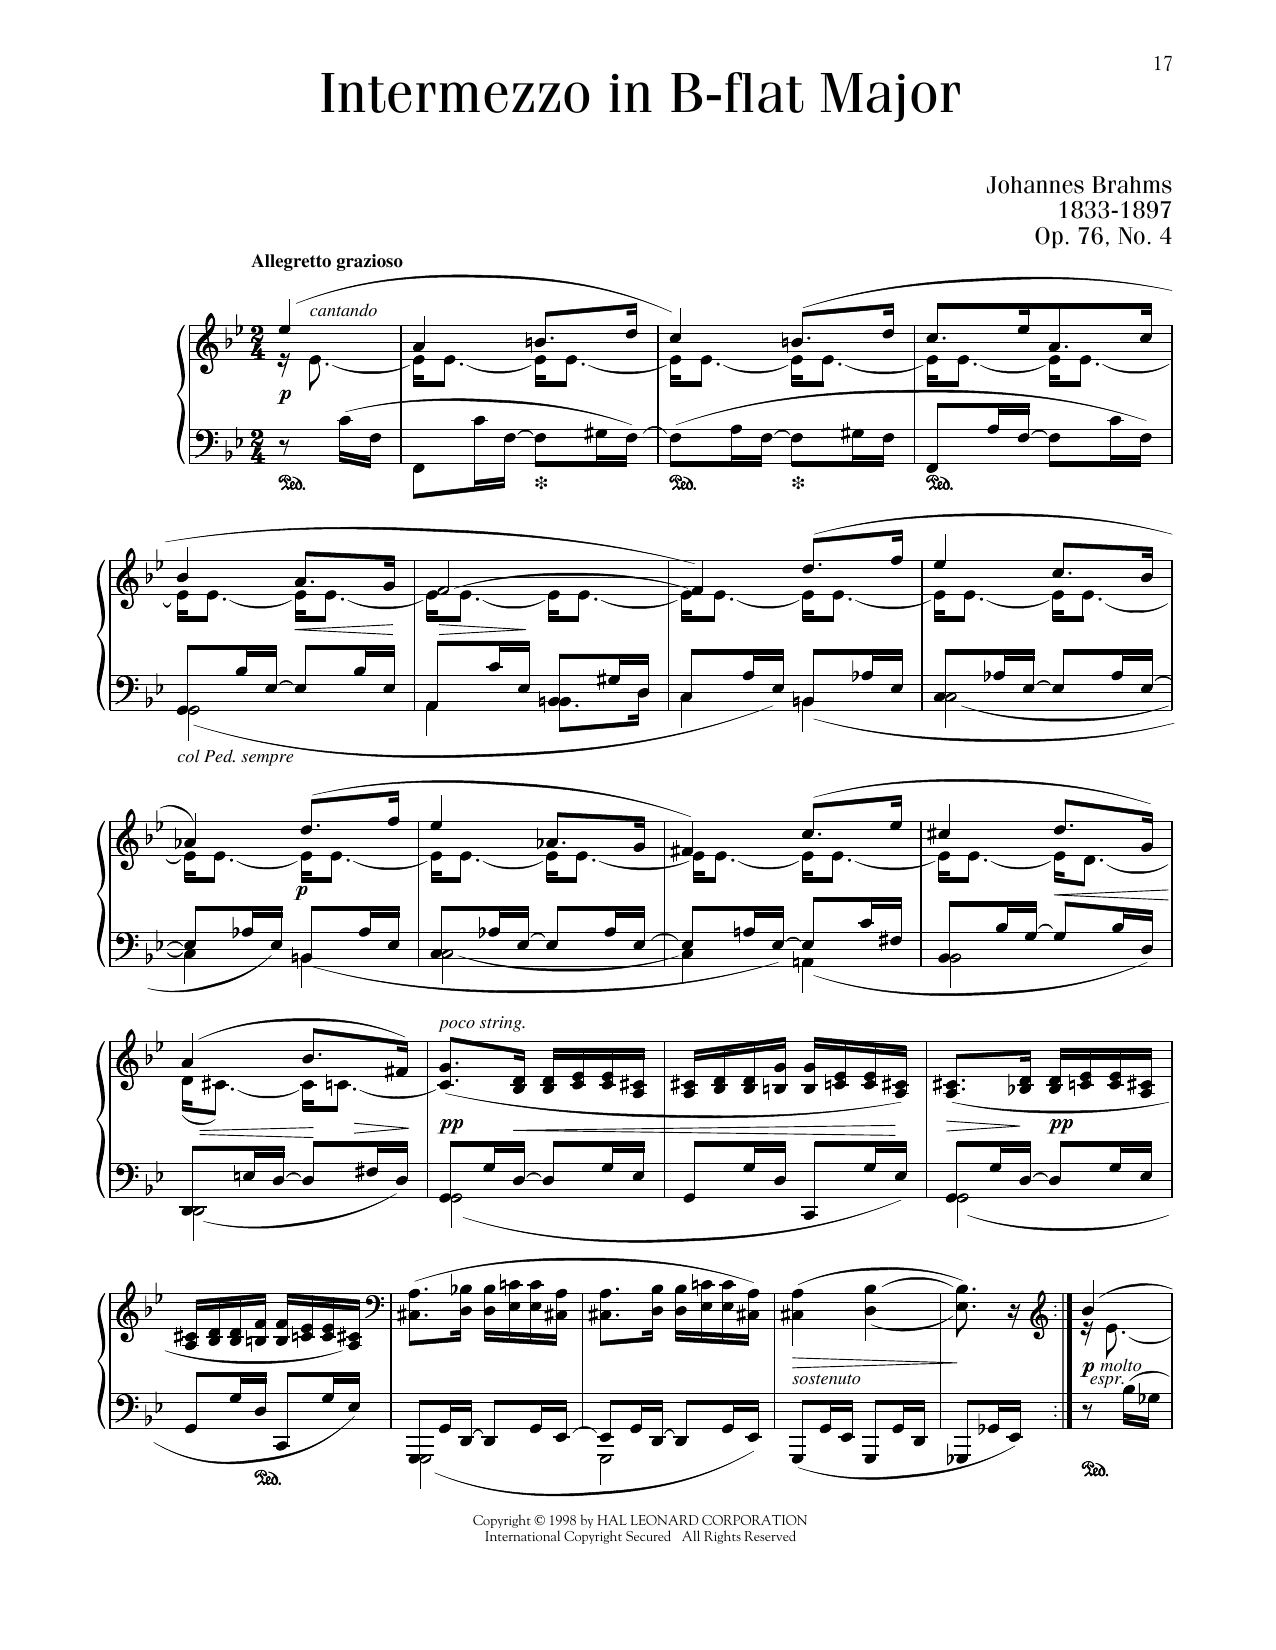 Johannes Brahms Intermezzo In B-flat Major, Op. 76, No. 4 sheet music notes printable PDF score